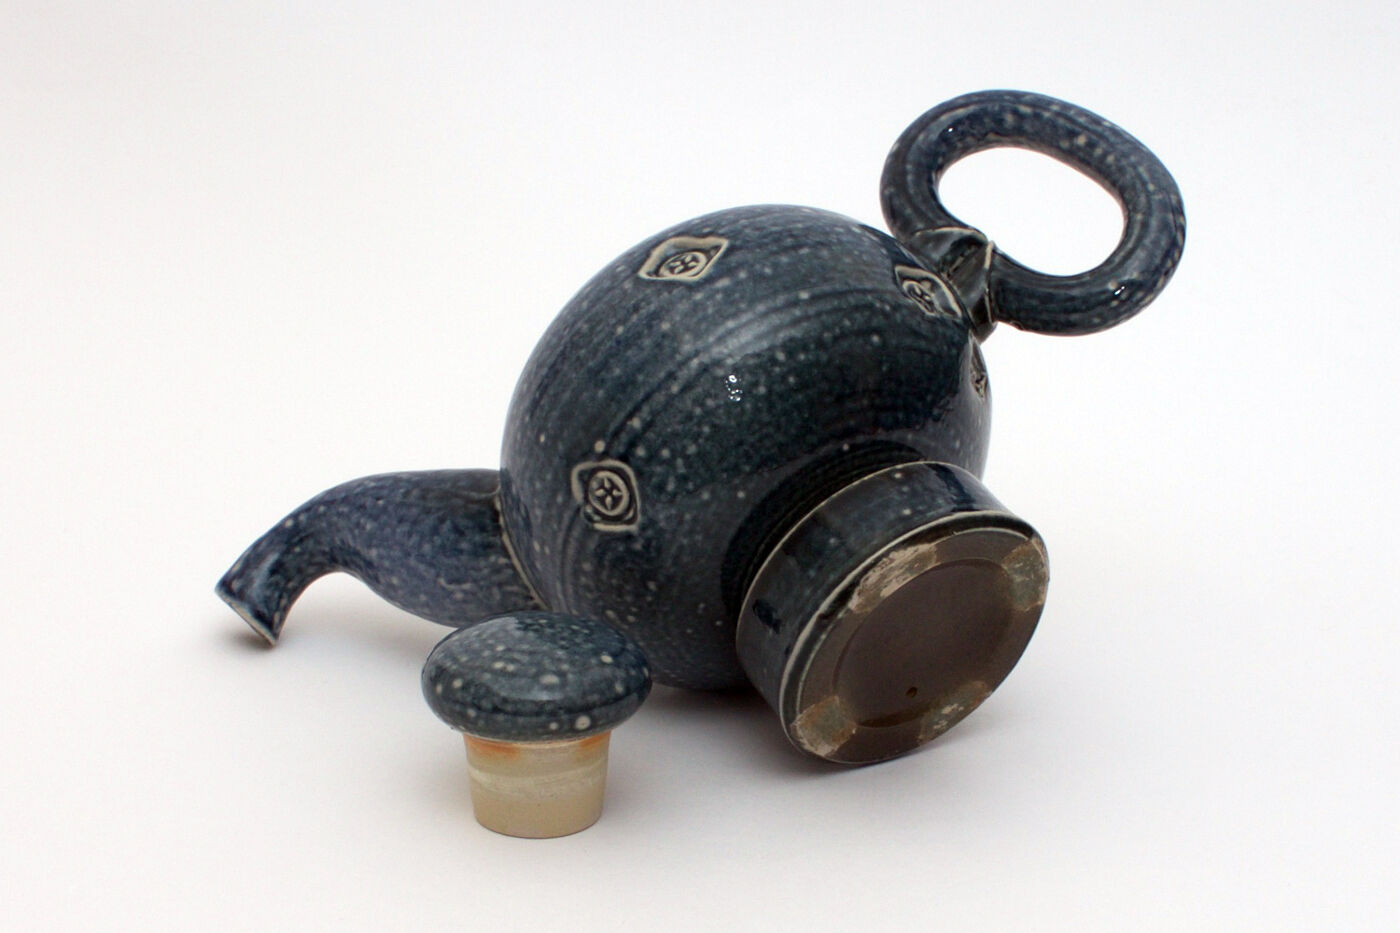 Peter Meanley Ceramic Tea Pot 31